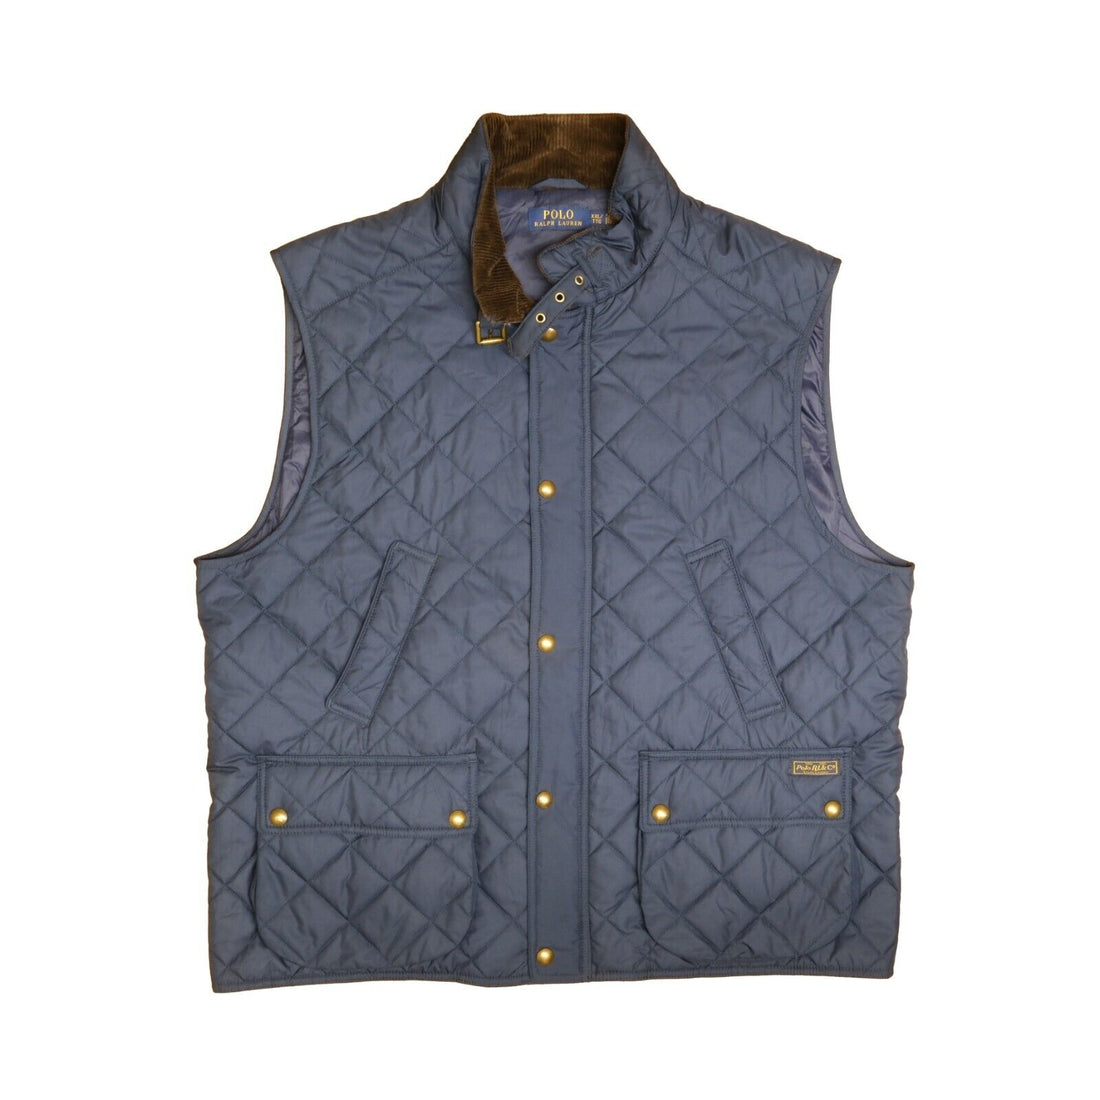 Polo Ralph Lauren Quilted Vest Jacket Size 2XL Blue